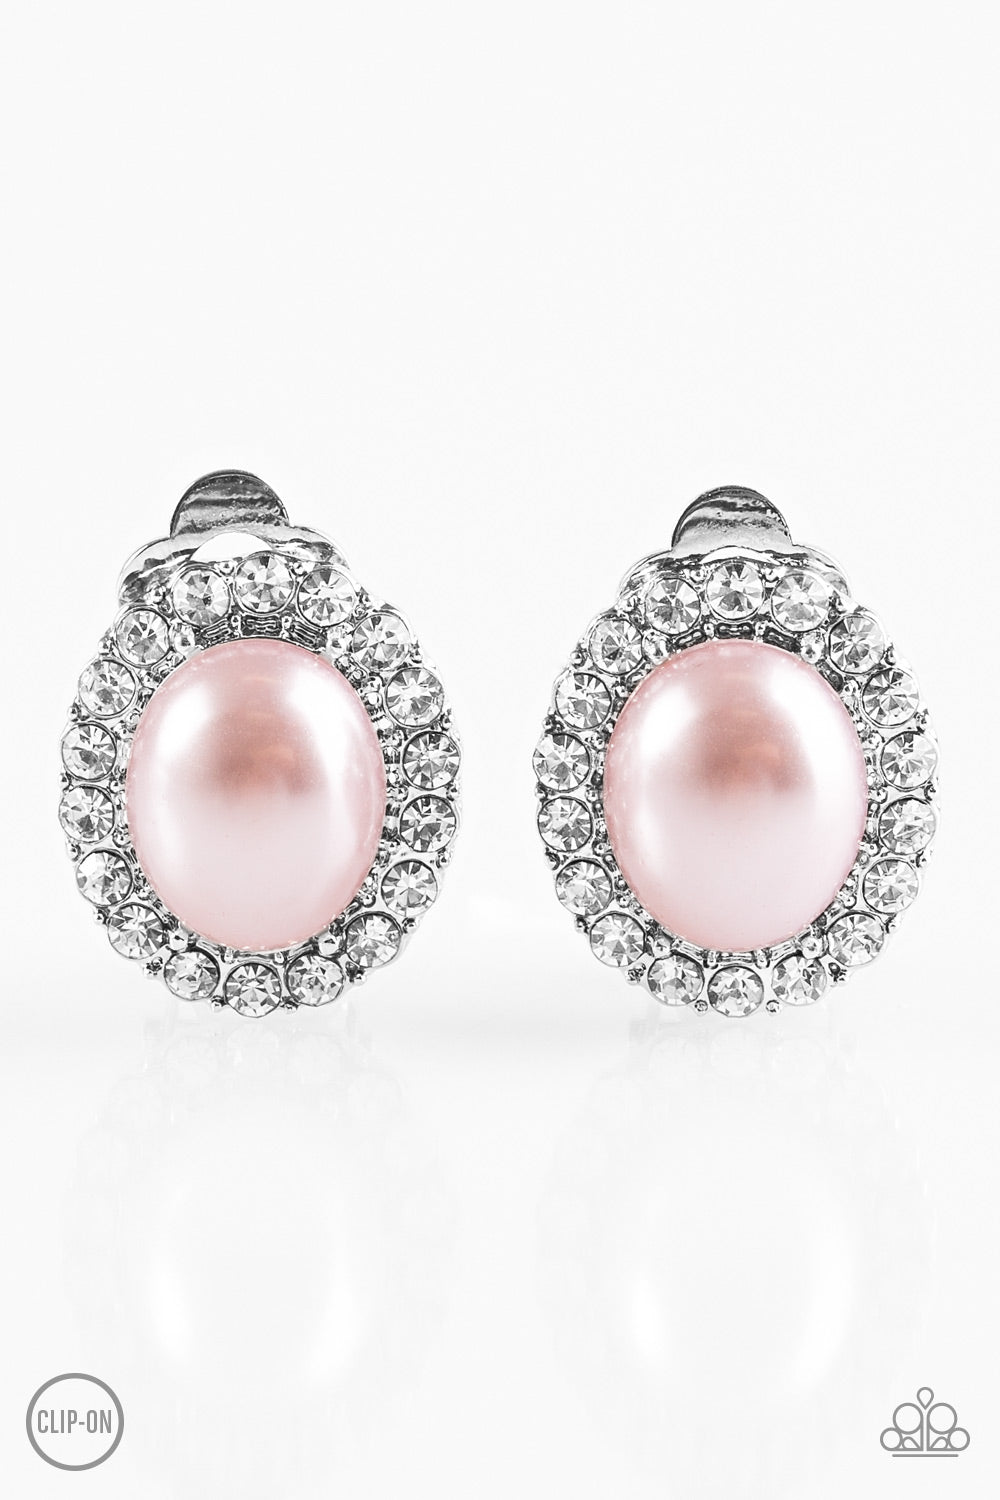 Romantically Regal Pink Paparazzi Earrings Cashmere Pink Jewels - Cashmere Pink Jewels & Accessories, Cashmere Pink Jewels & Accessories - Paparazzi